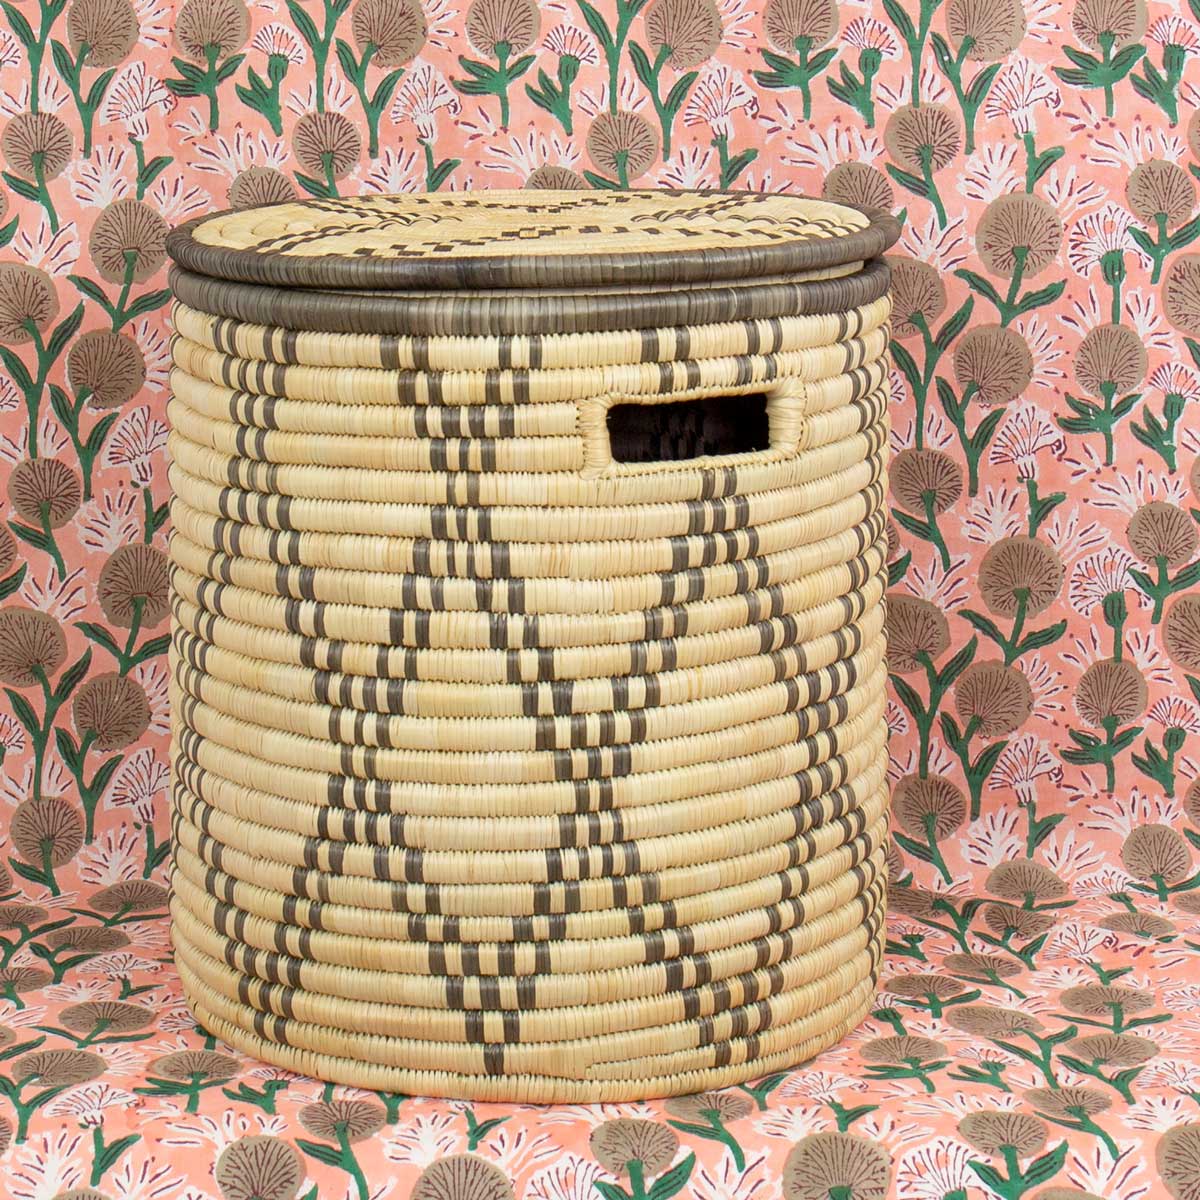 MALAWI Laundry basket M, natural